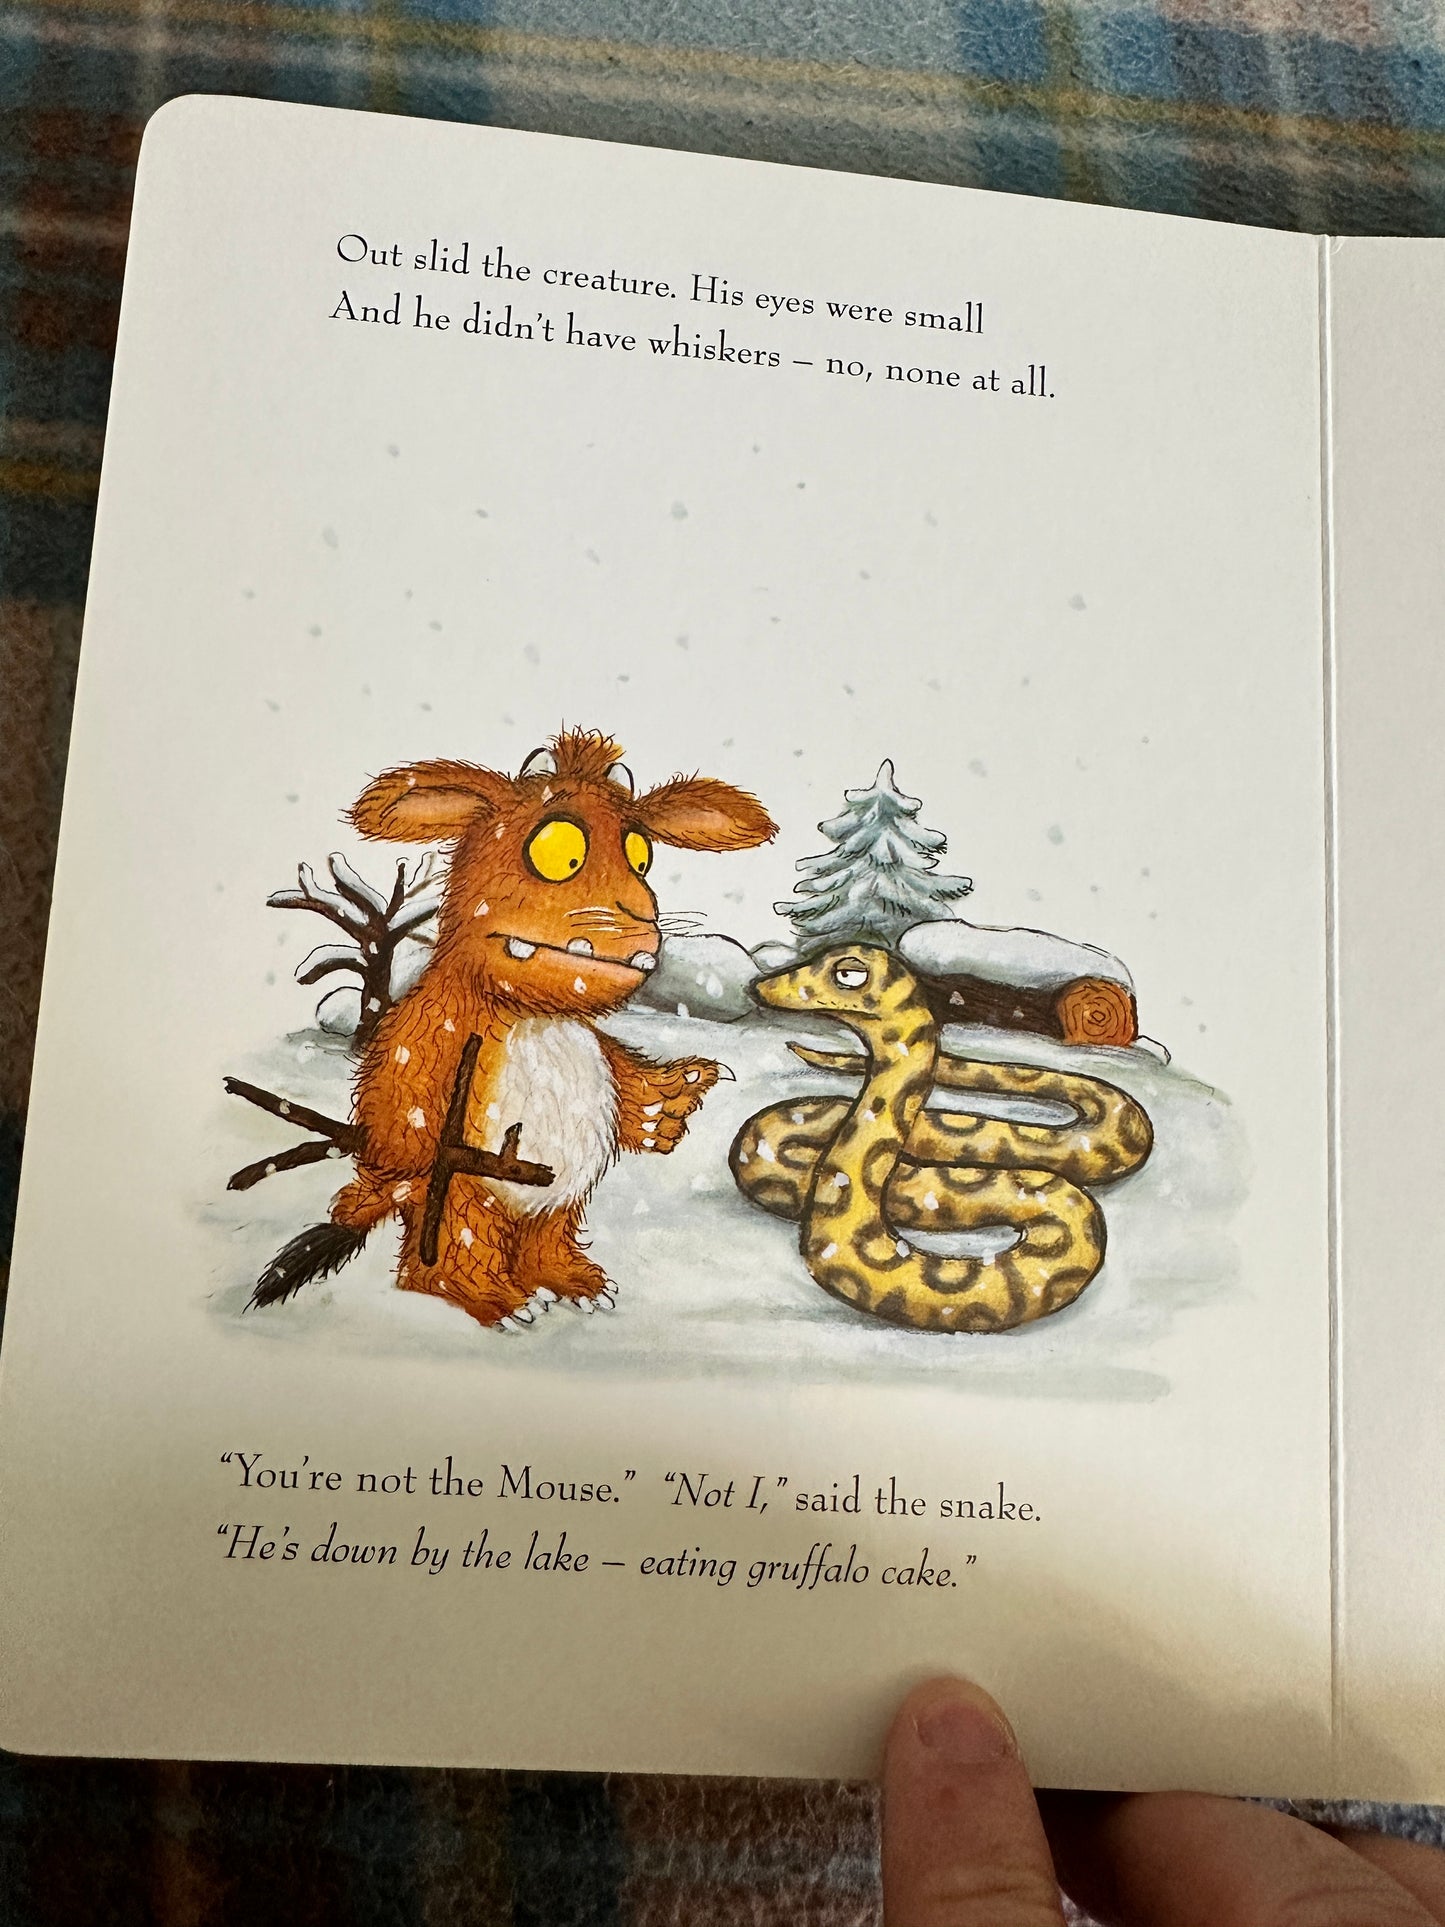 2010 The Gruffalo’s Child - Julia Donaldson(Axel Scheffler illustration) MacMillan Children’s Books